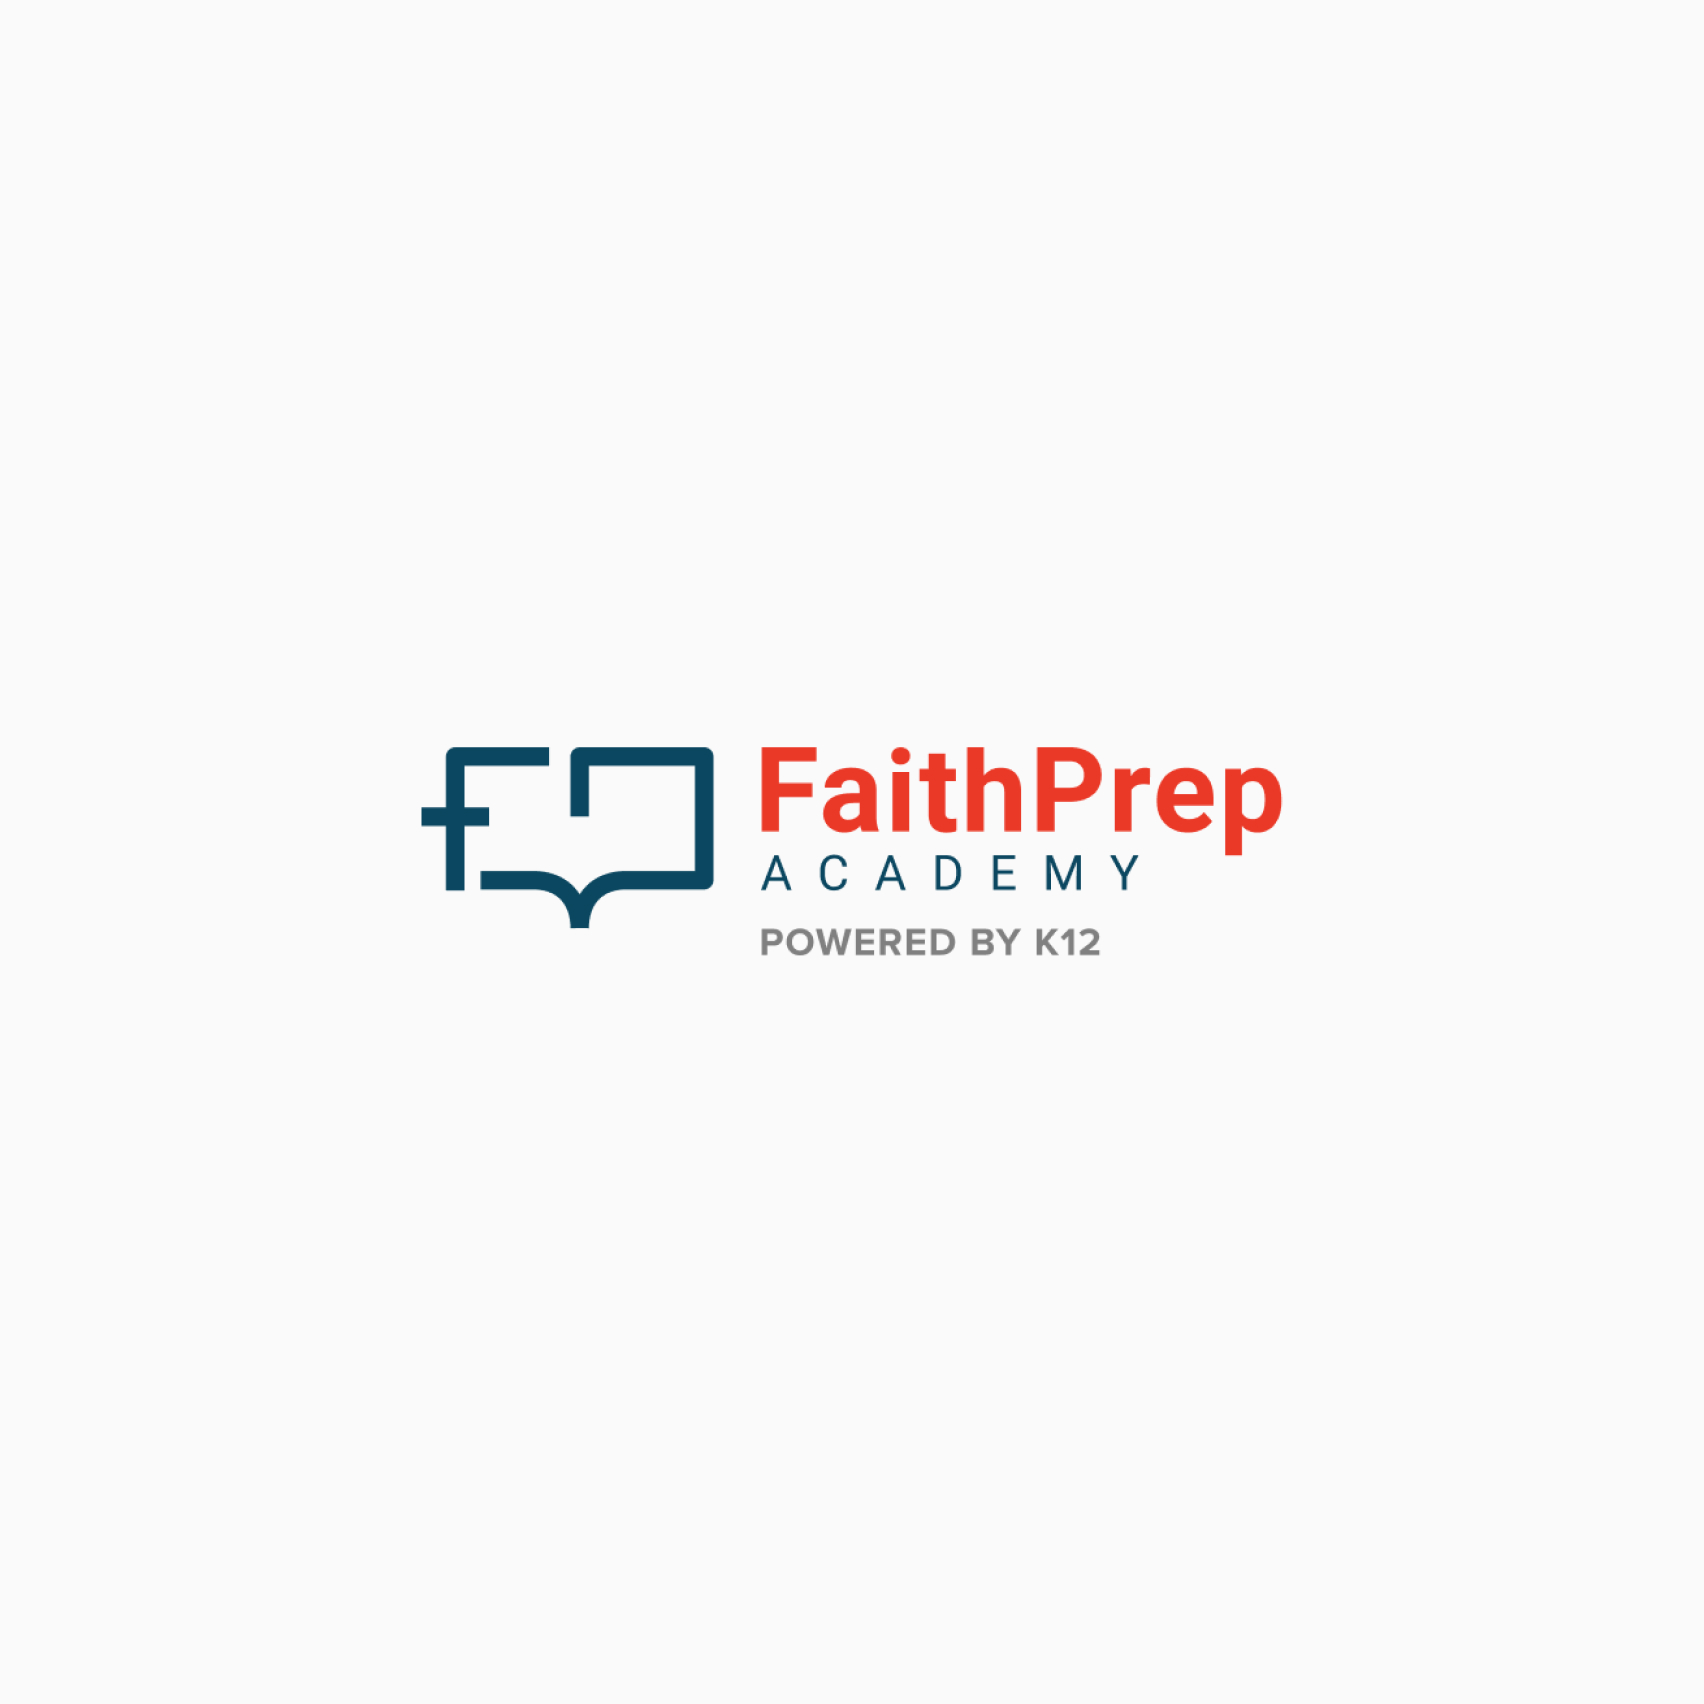 Online Private Schools image 11 (name Faith Prep)